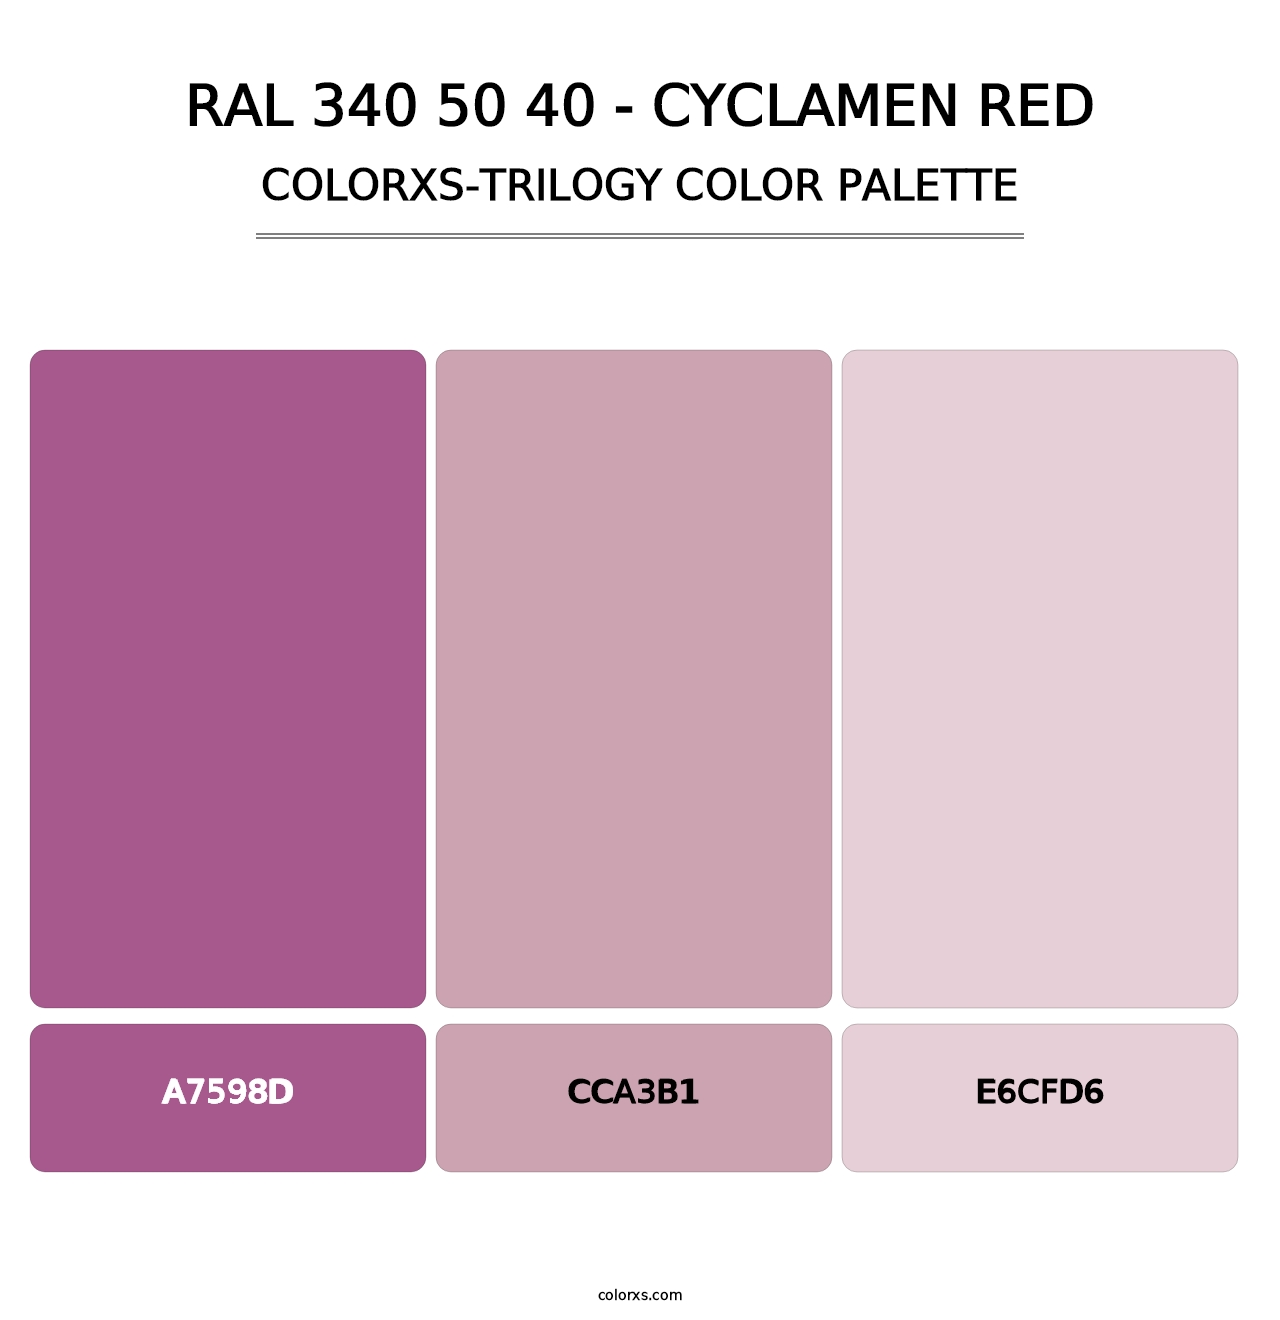 RAL 340 50 40 - Cyclamen Red - Colorxs Trilogy Palette